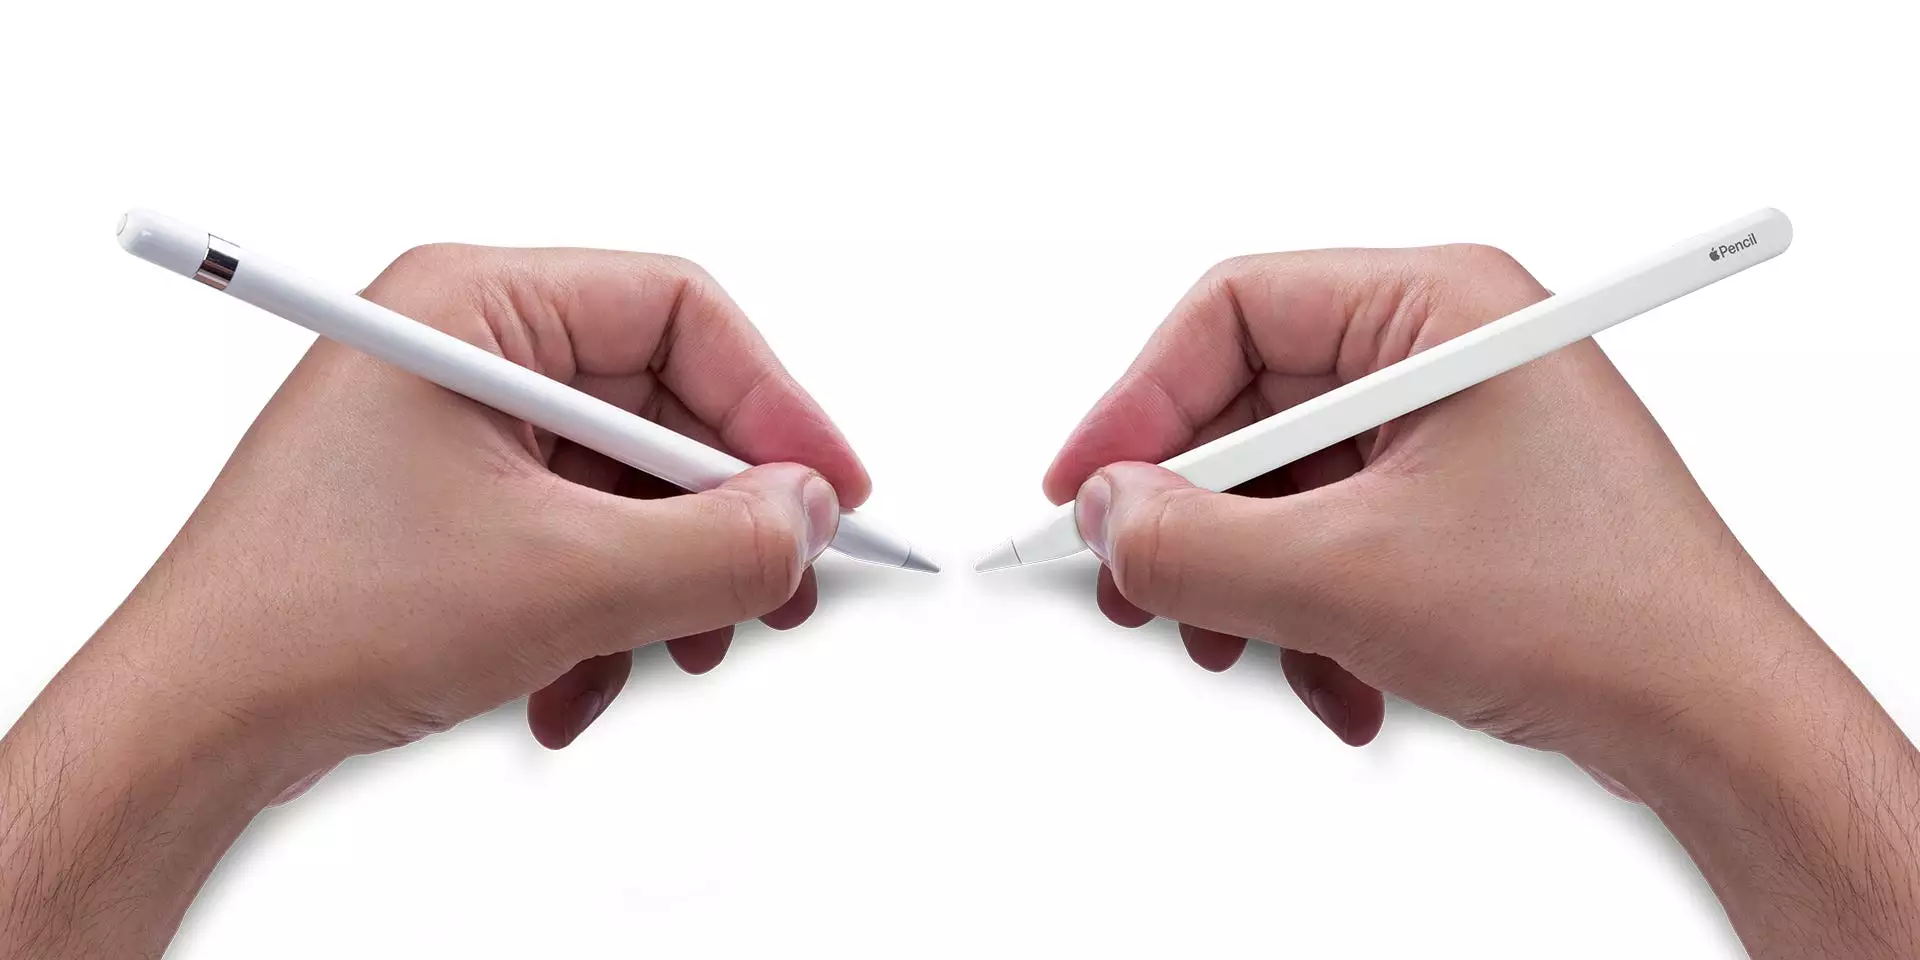 Apple Pencil 是 iPad 用户的最佳触控笔 - 这是获取以及如何使用它的方法